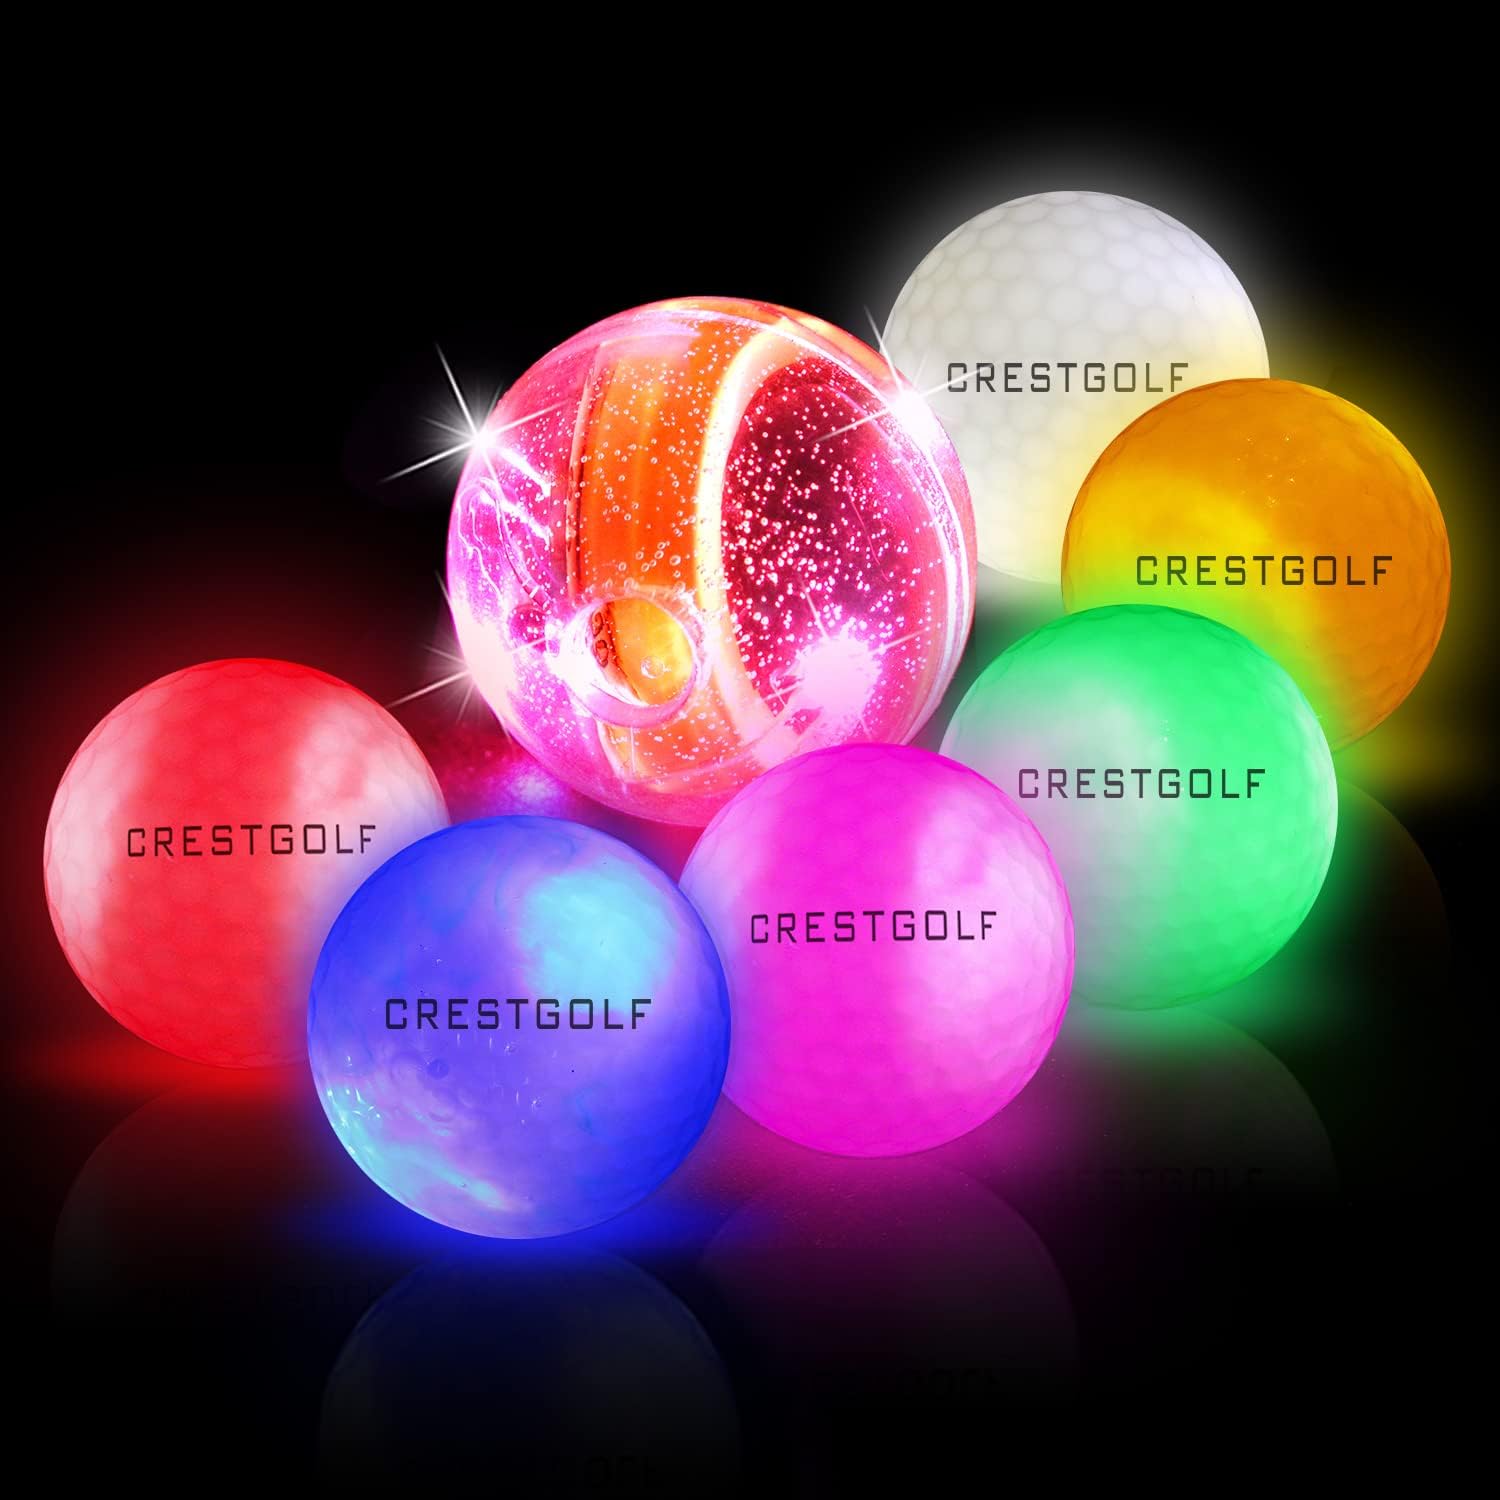 Crestgolf LED golfbälle bunt Light Up Golfbälle, Night Glow Flash Light up Golfball für Lange Distanzen, Rosa rot blau grün Gelb weiß